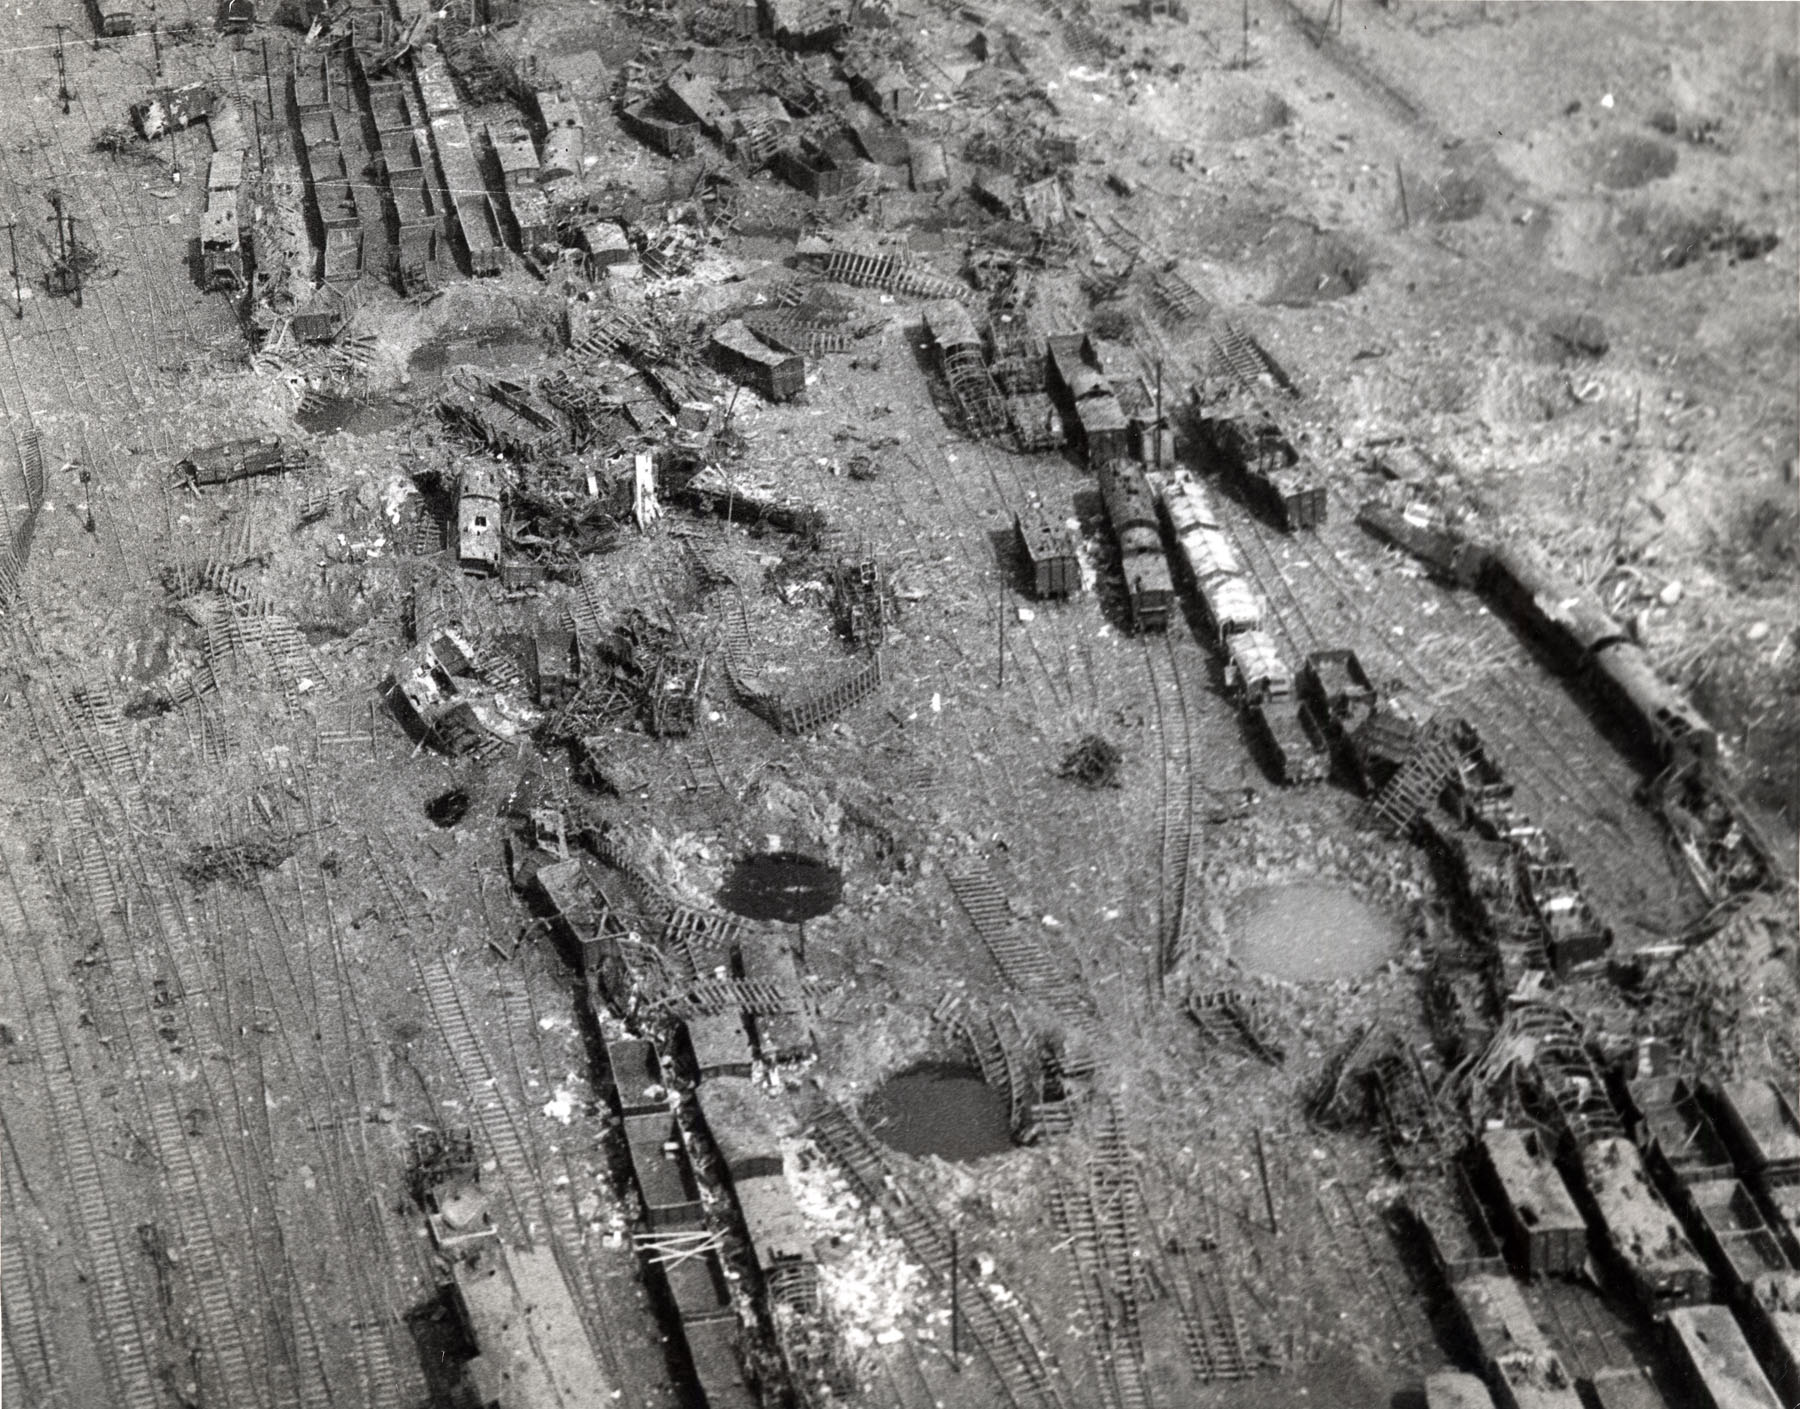 https://upload.wikimedia.org/wikipedia/commons/7/7f/Limburg_railyard_bombed_23_Dec_1944.jpg